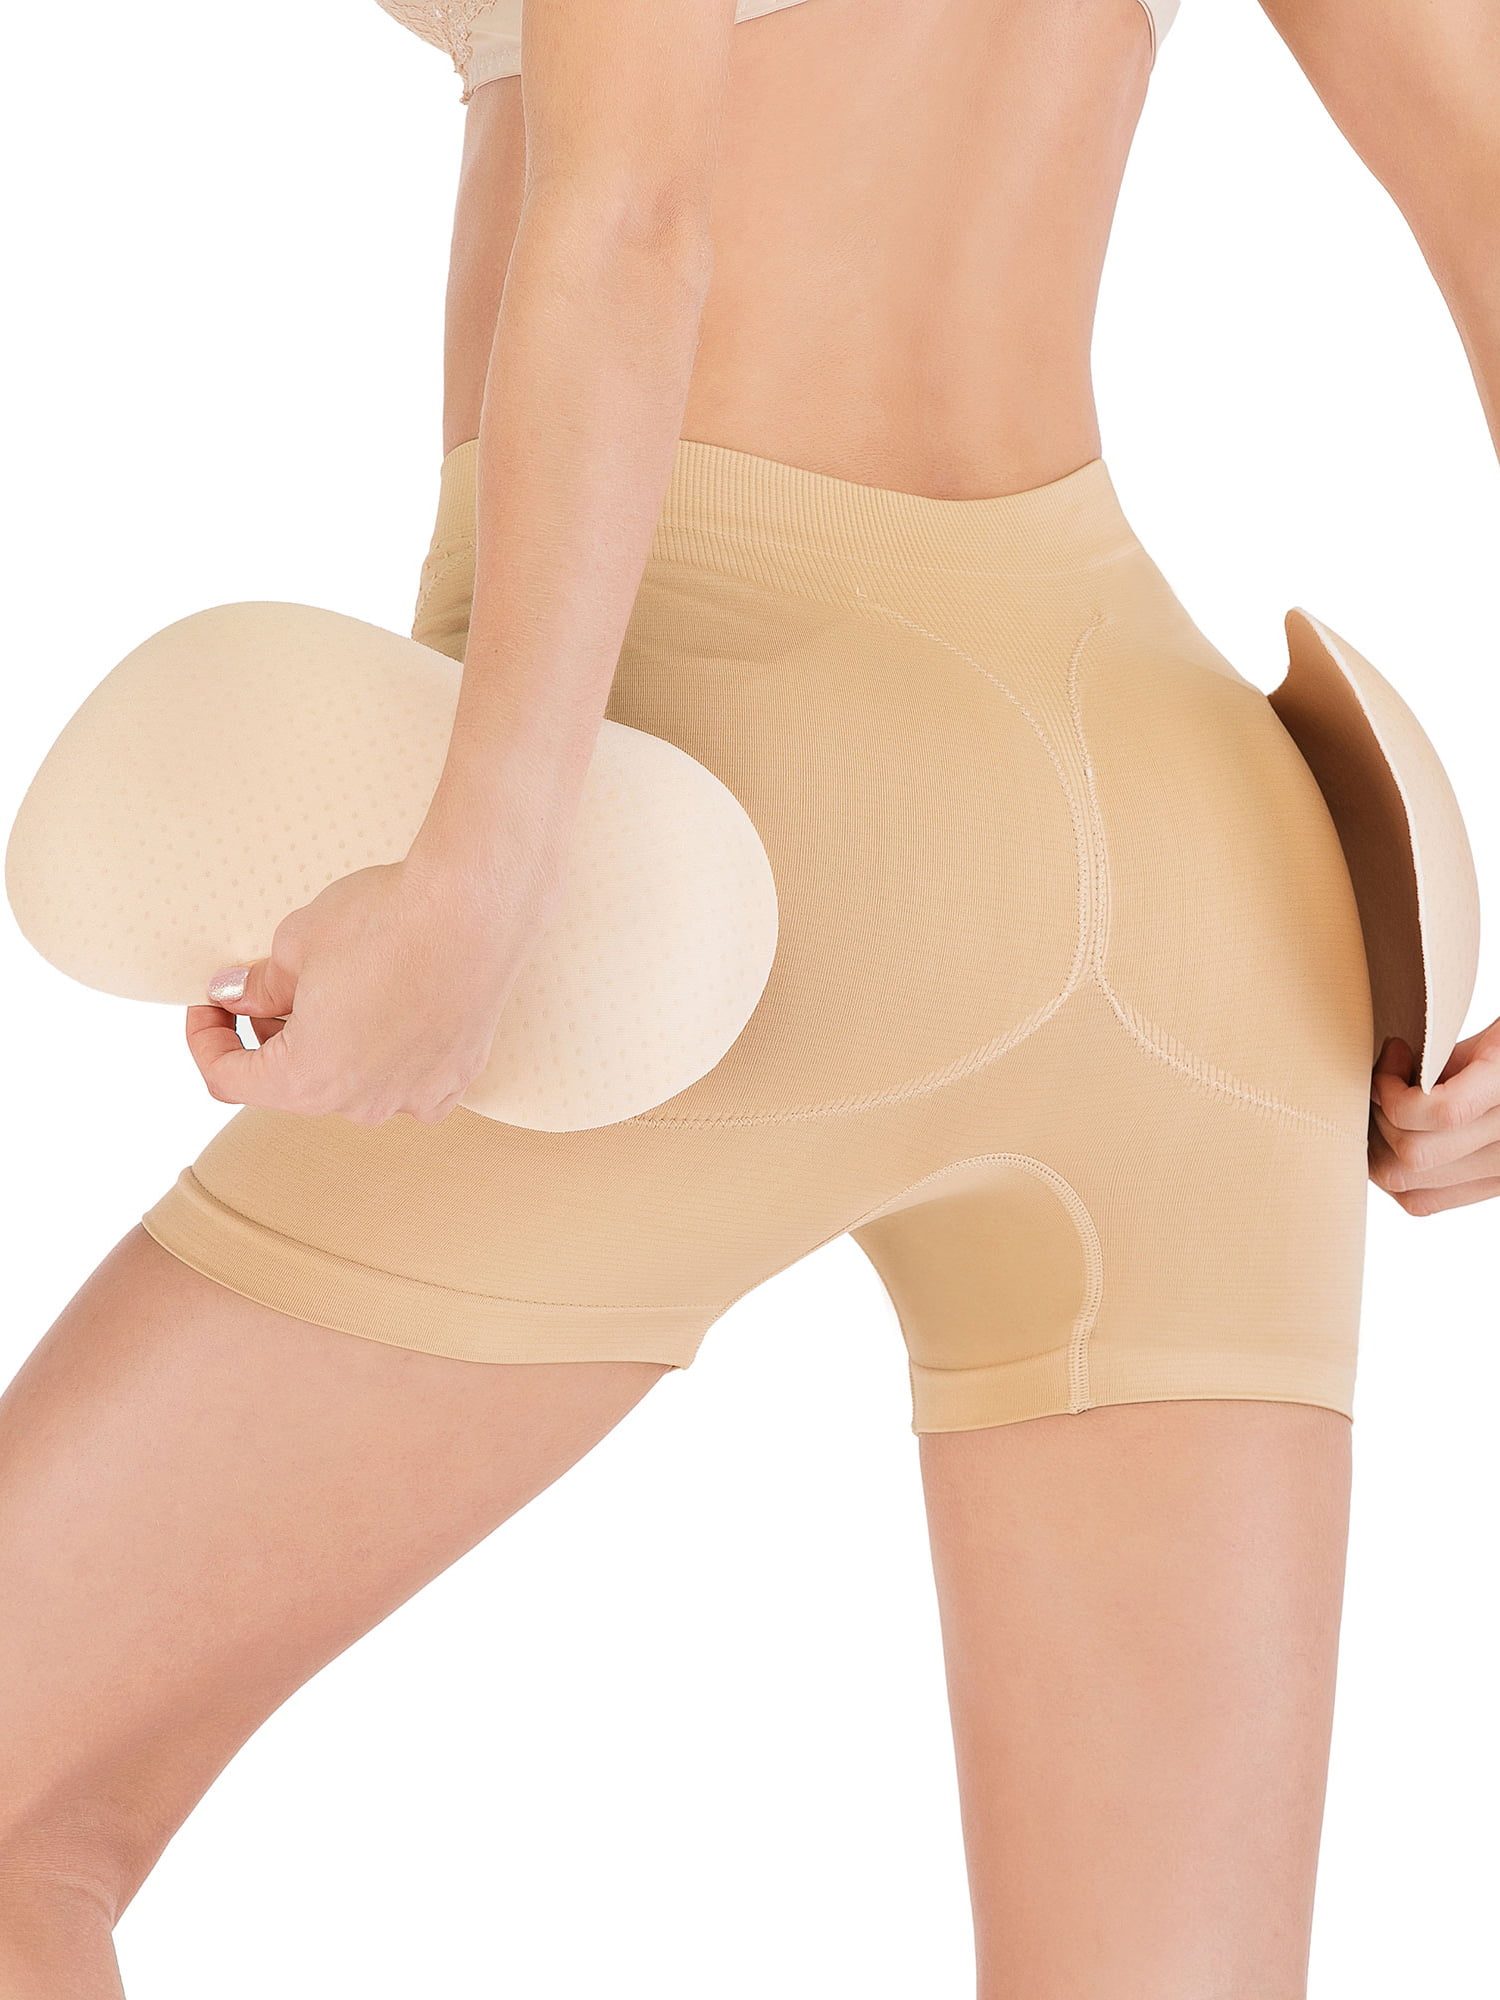 FOCUSSEXY Women Silicone Butt Lifter Pads Shapewear Hip Enhancer Underwear Panty